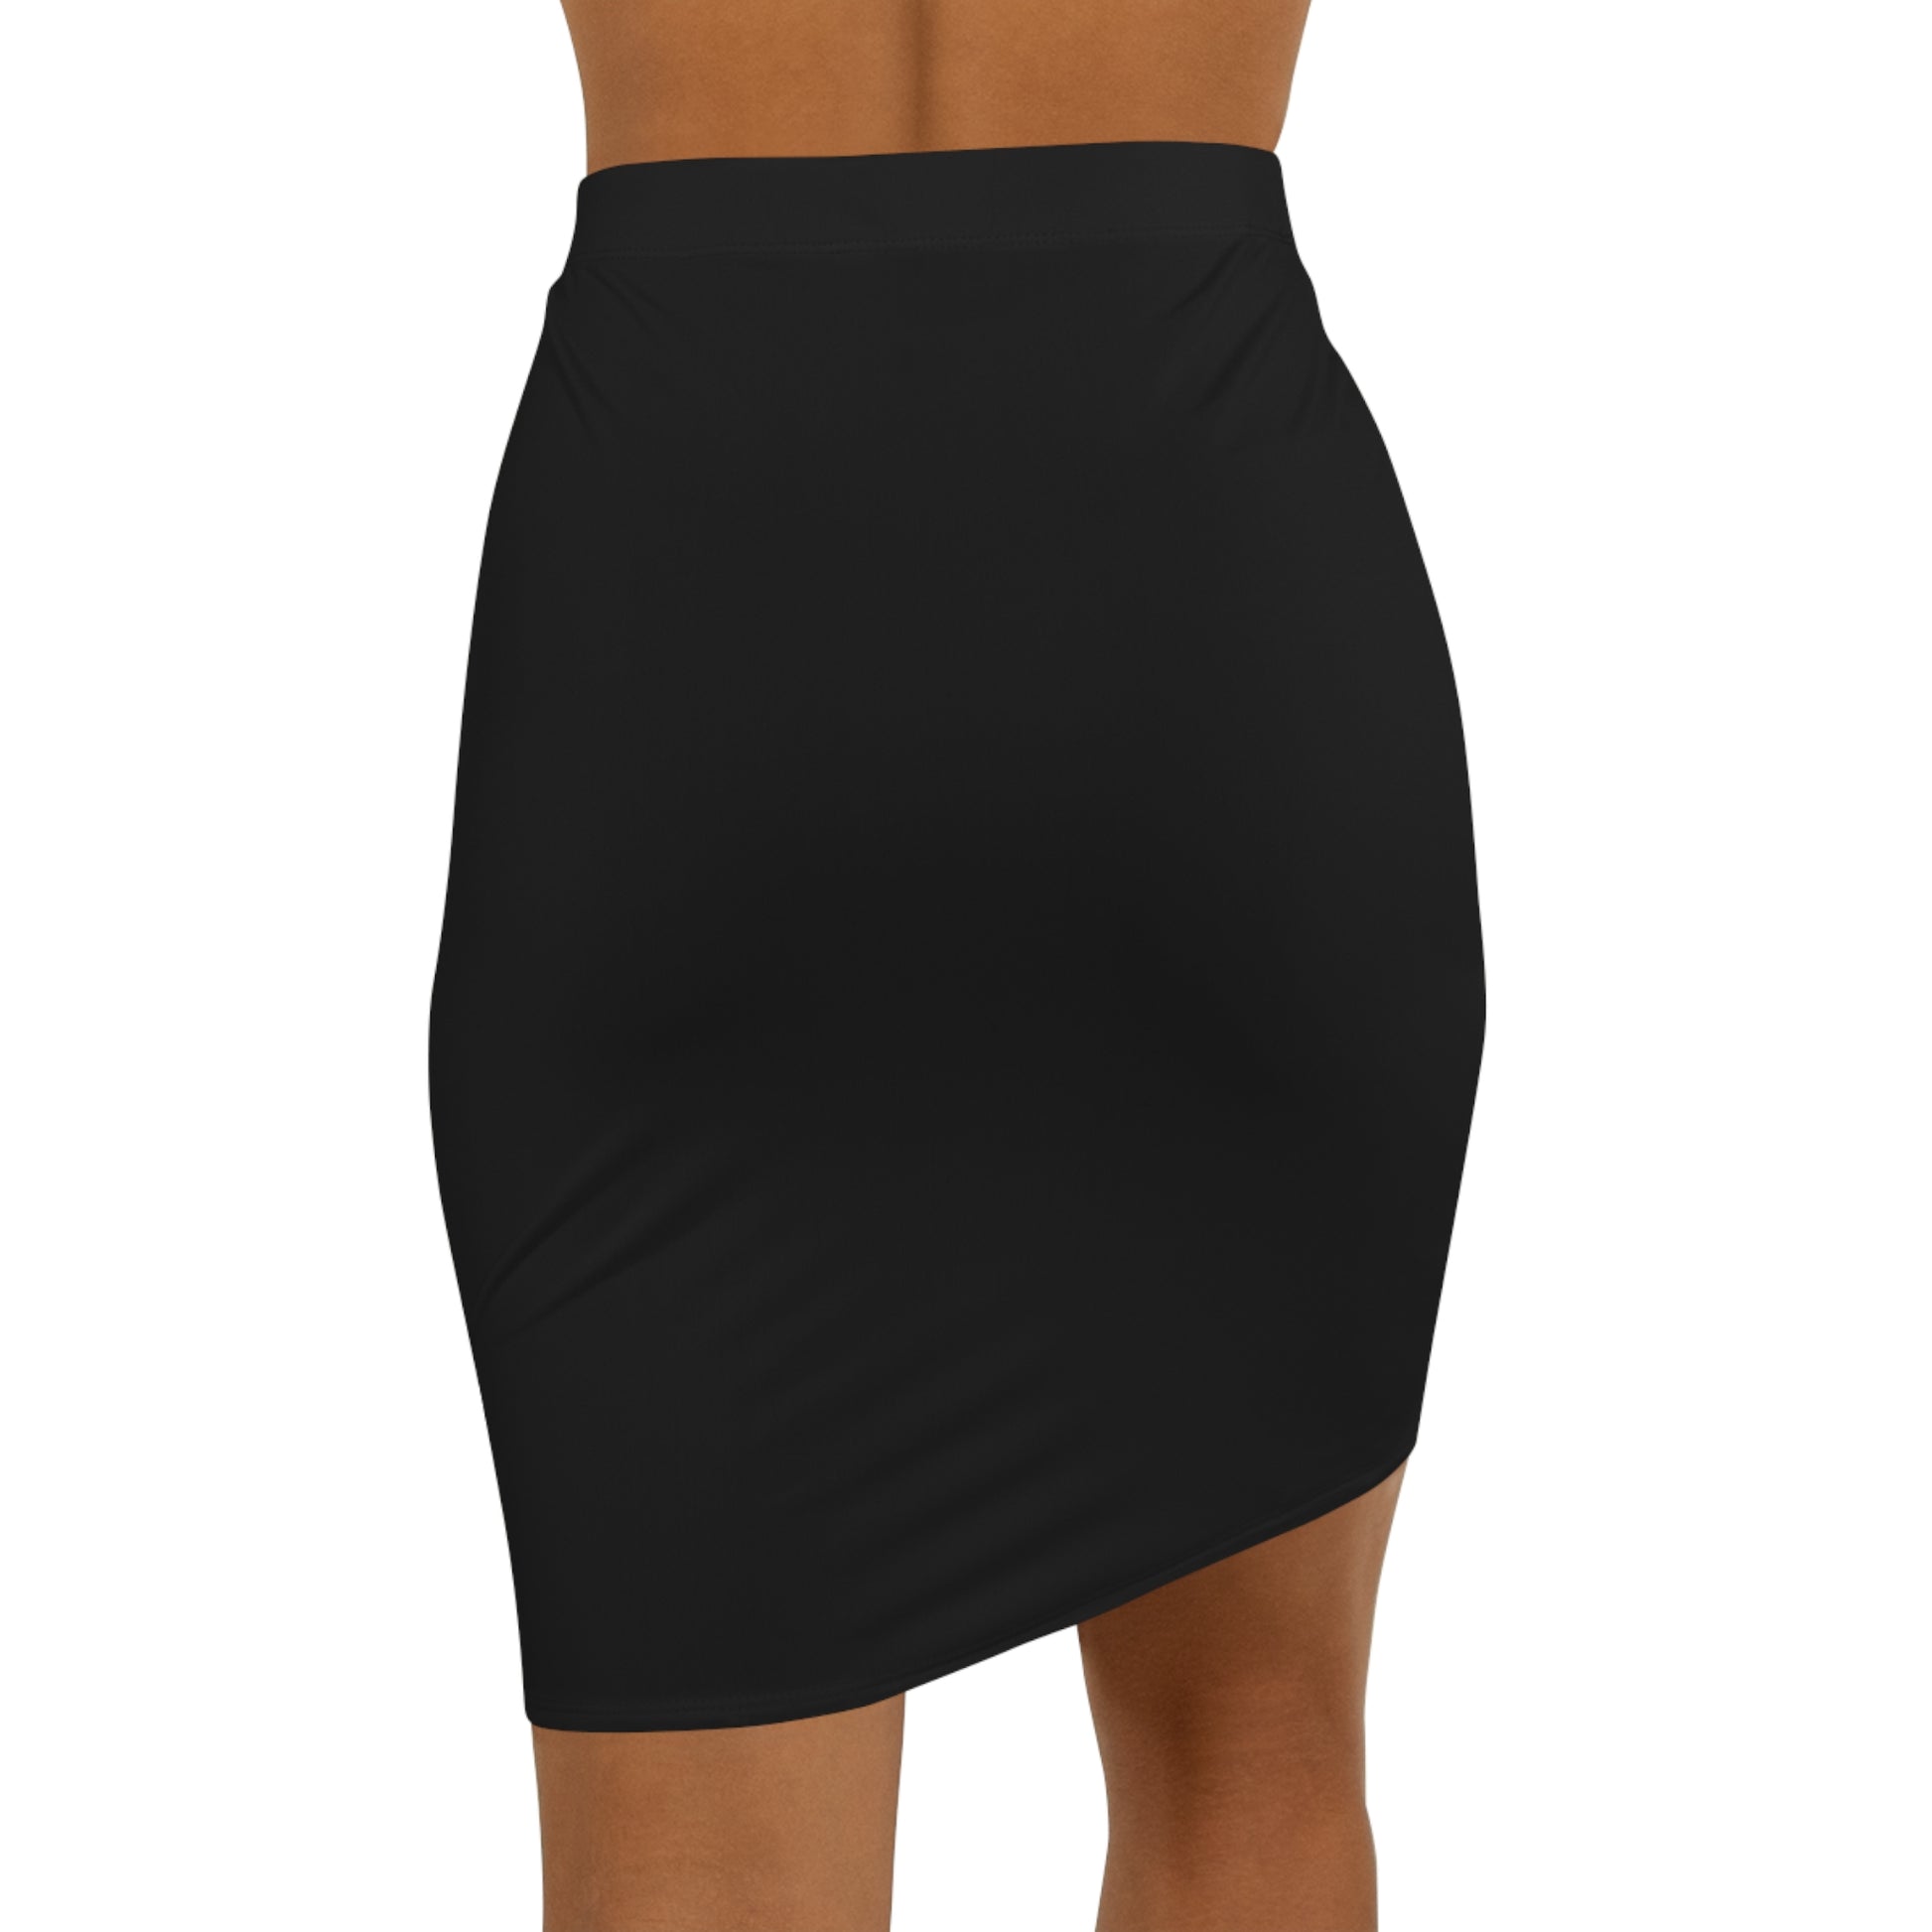 a woman wearing a black skirt